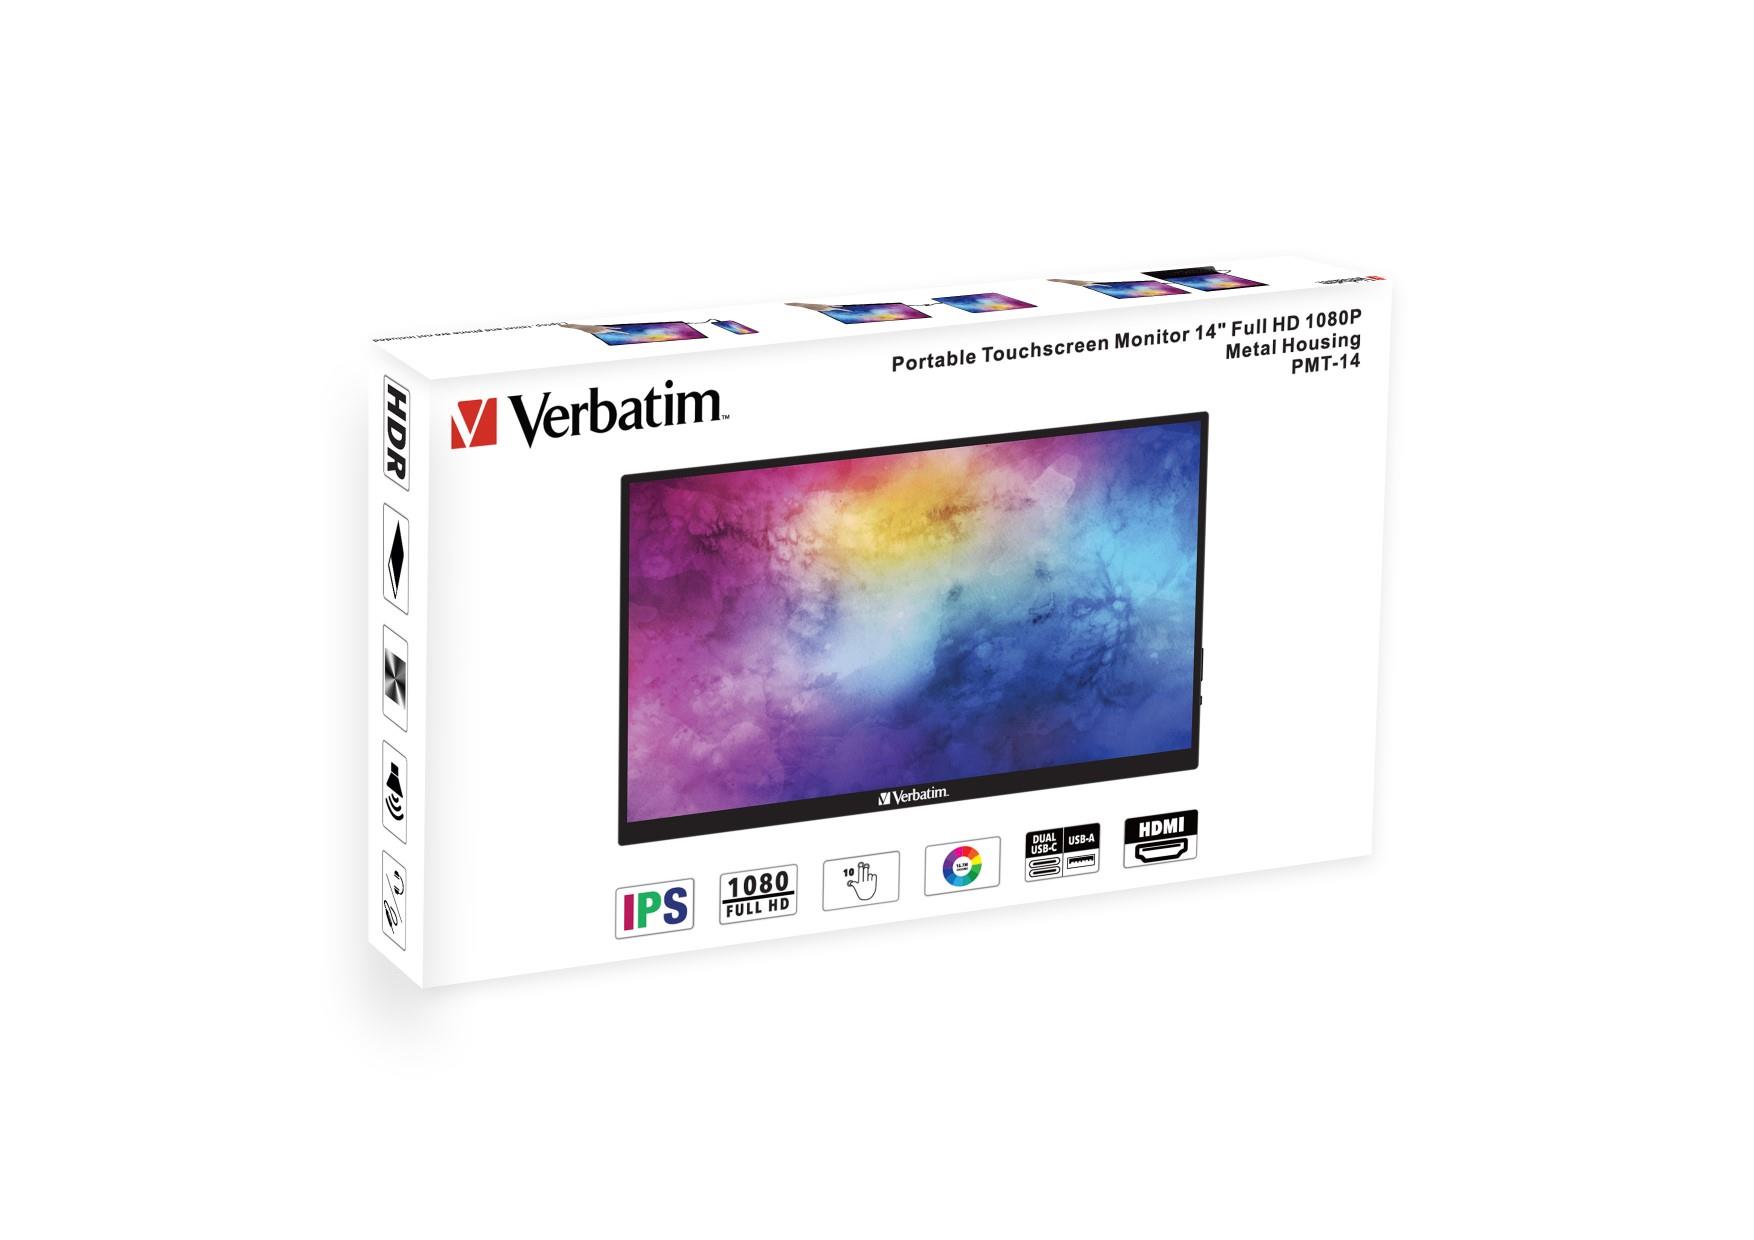 Verbatim PMT-14 Portable Touchscreen Monitor 14